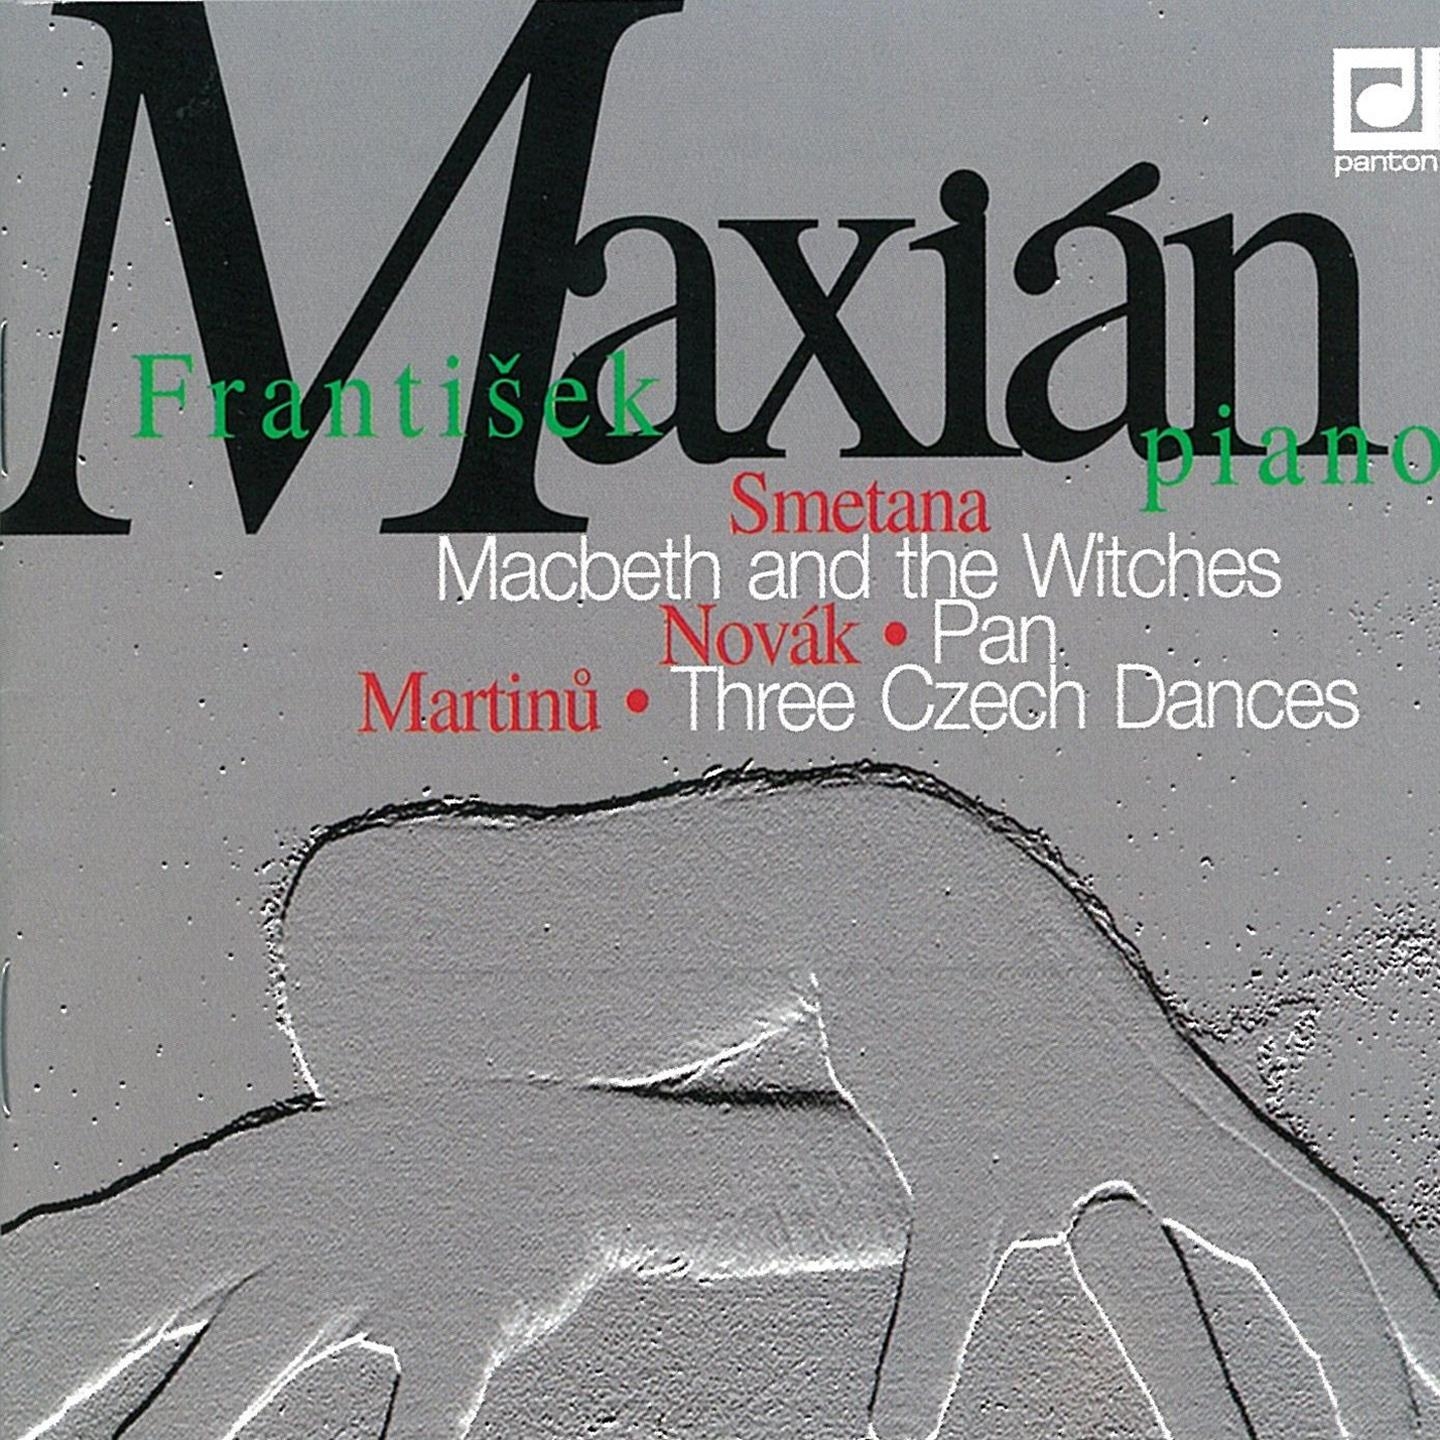 Smetana: Macbeth and the Witches  Nova k: Pan  Martin: Three Czech Dances